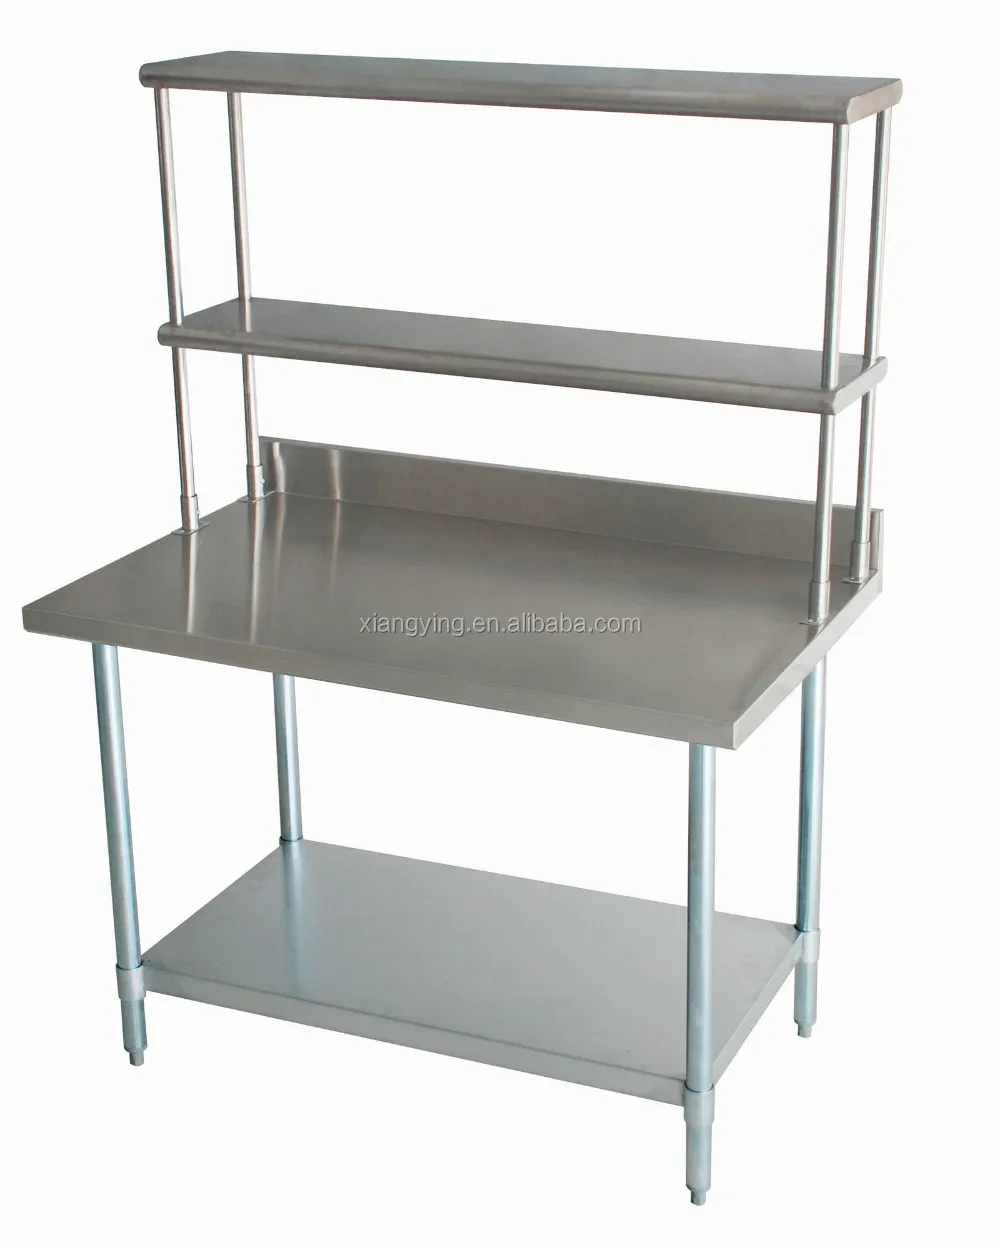 Nsf Approval Stainless Steel Kitchen Work Table Double Tier Overshelf Table Mounted Shelf Buy Overshelf